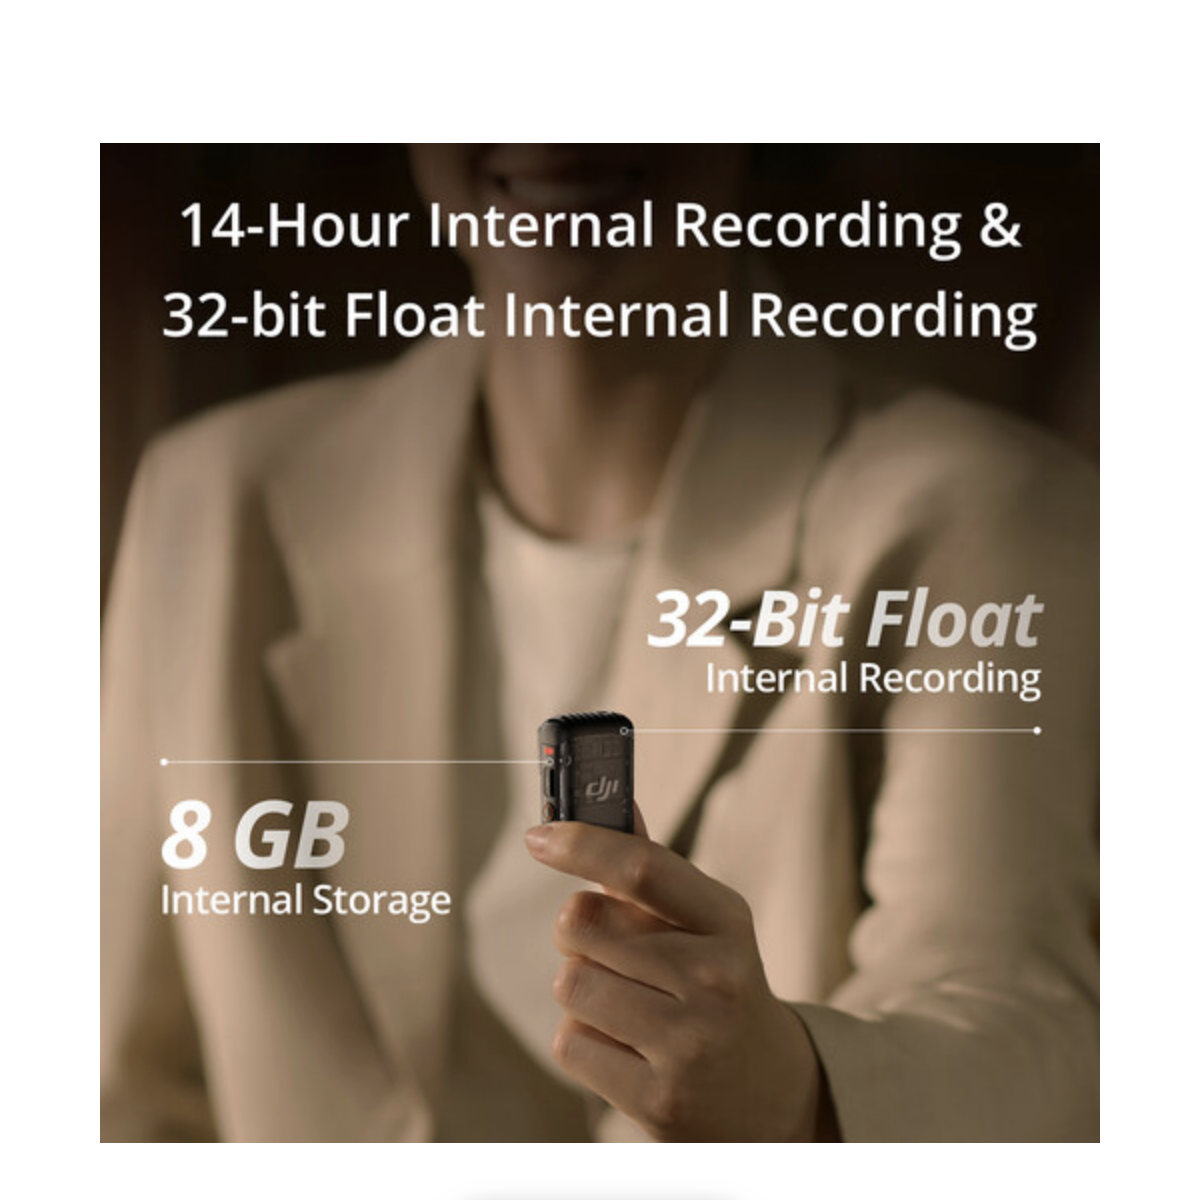 DJI Mic 2 Announced – 32-Bit Float Internal Recording, Bluetooth